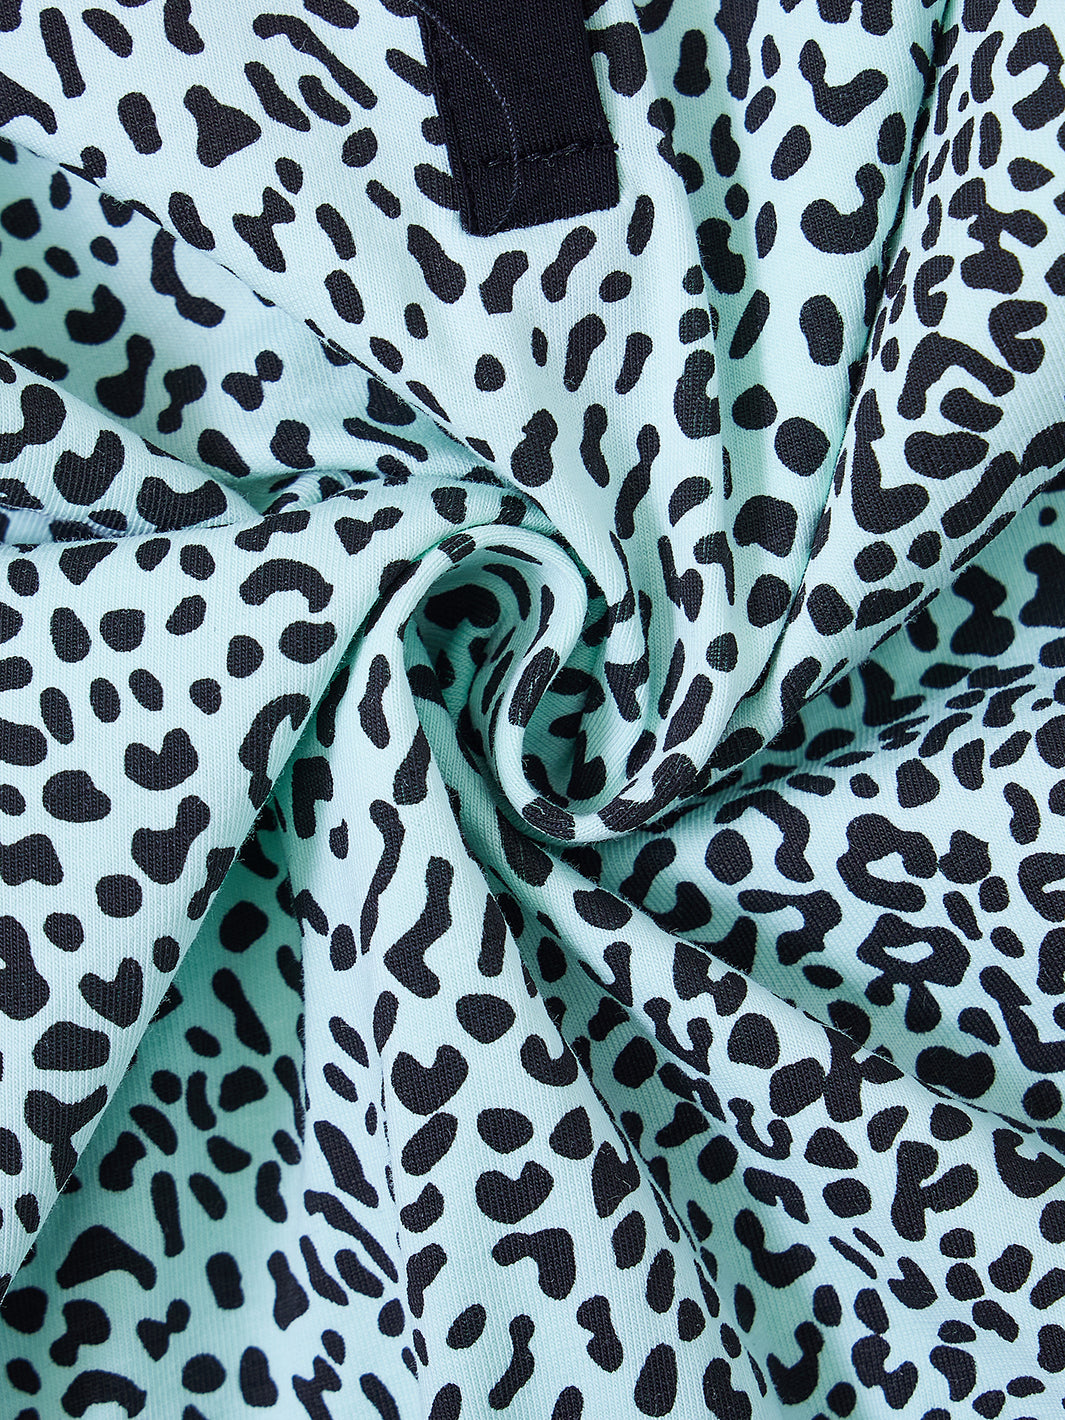 Leopard Print Hooded Top - Mint/Black